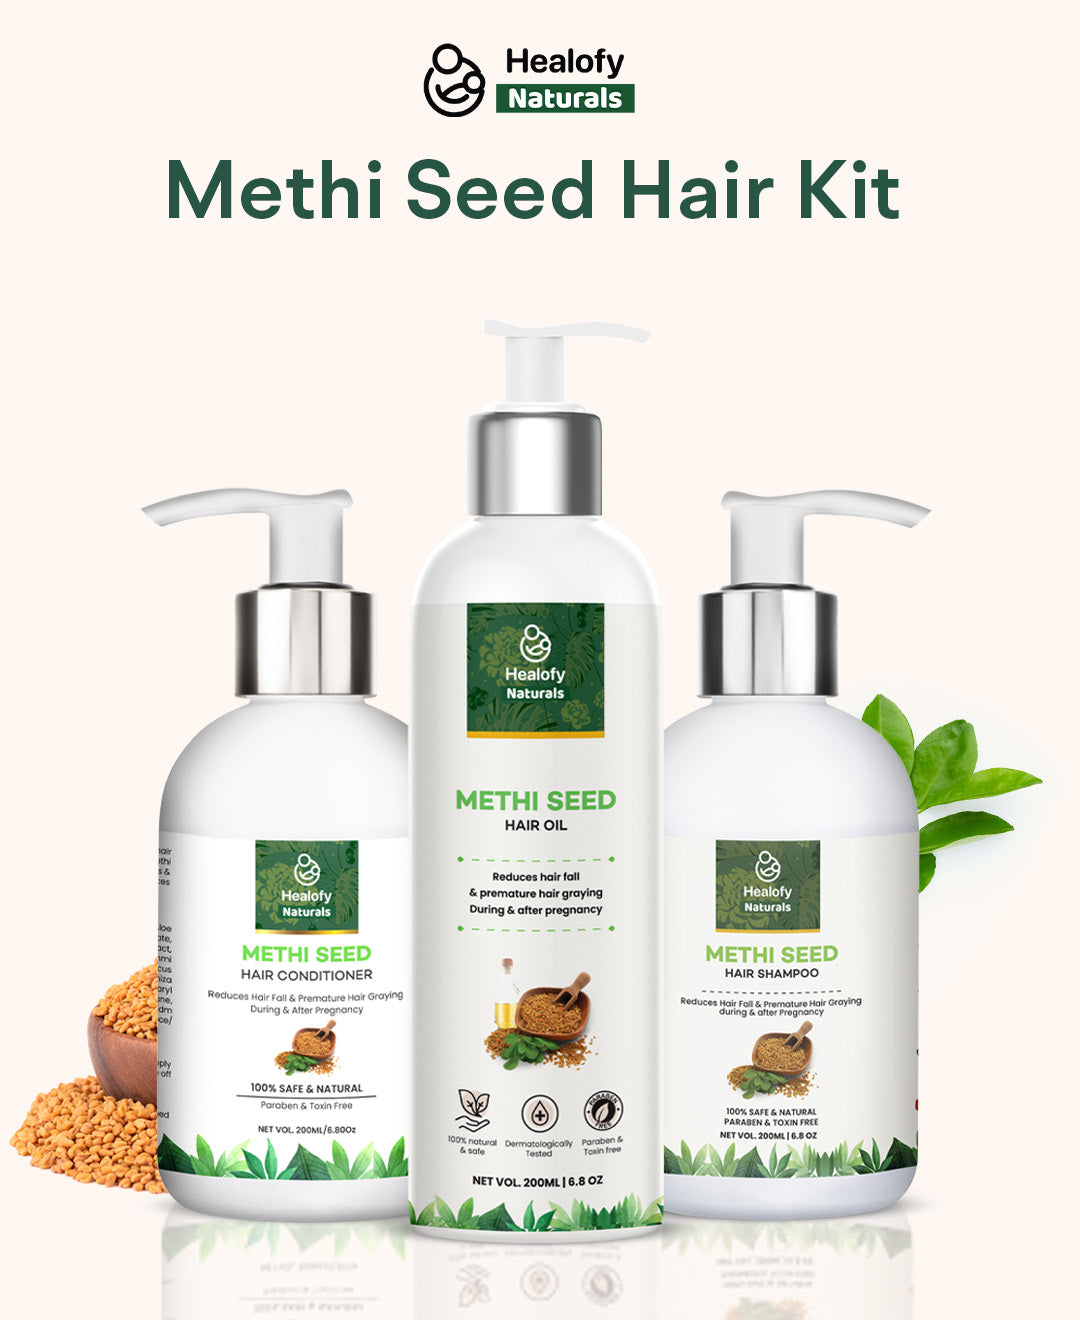 Healofy Naturals Methi Seed Hair Care Kit